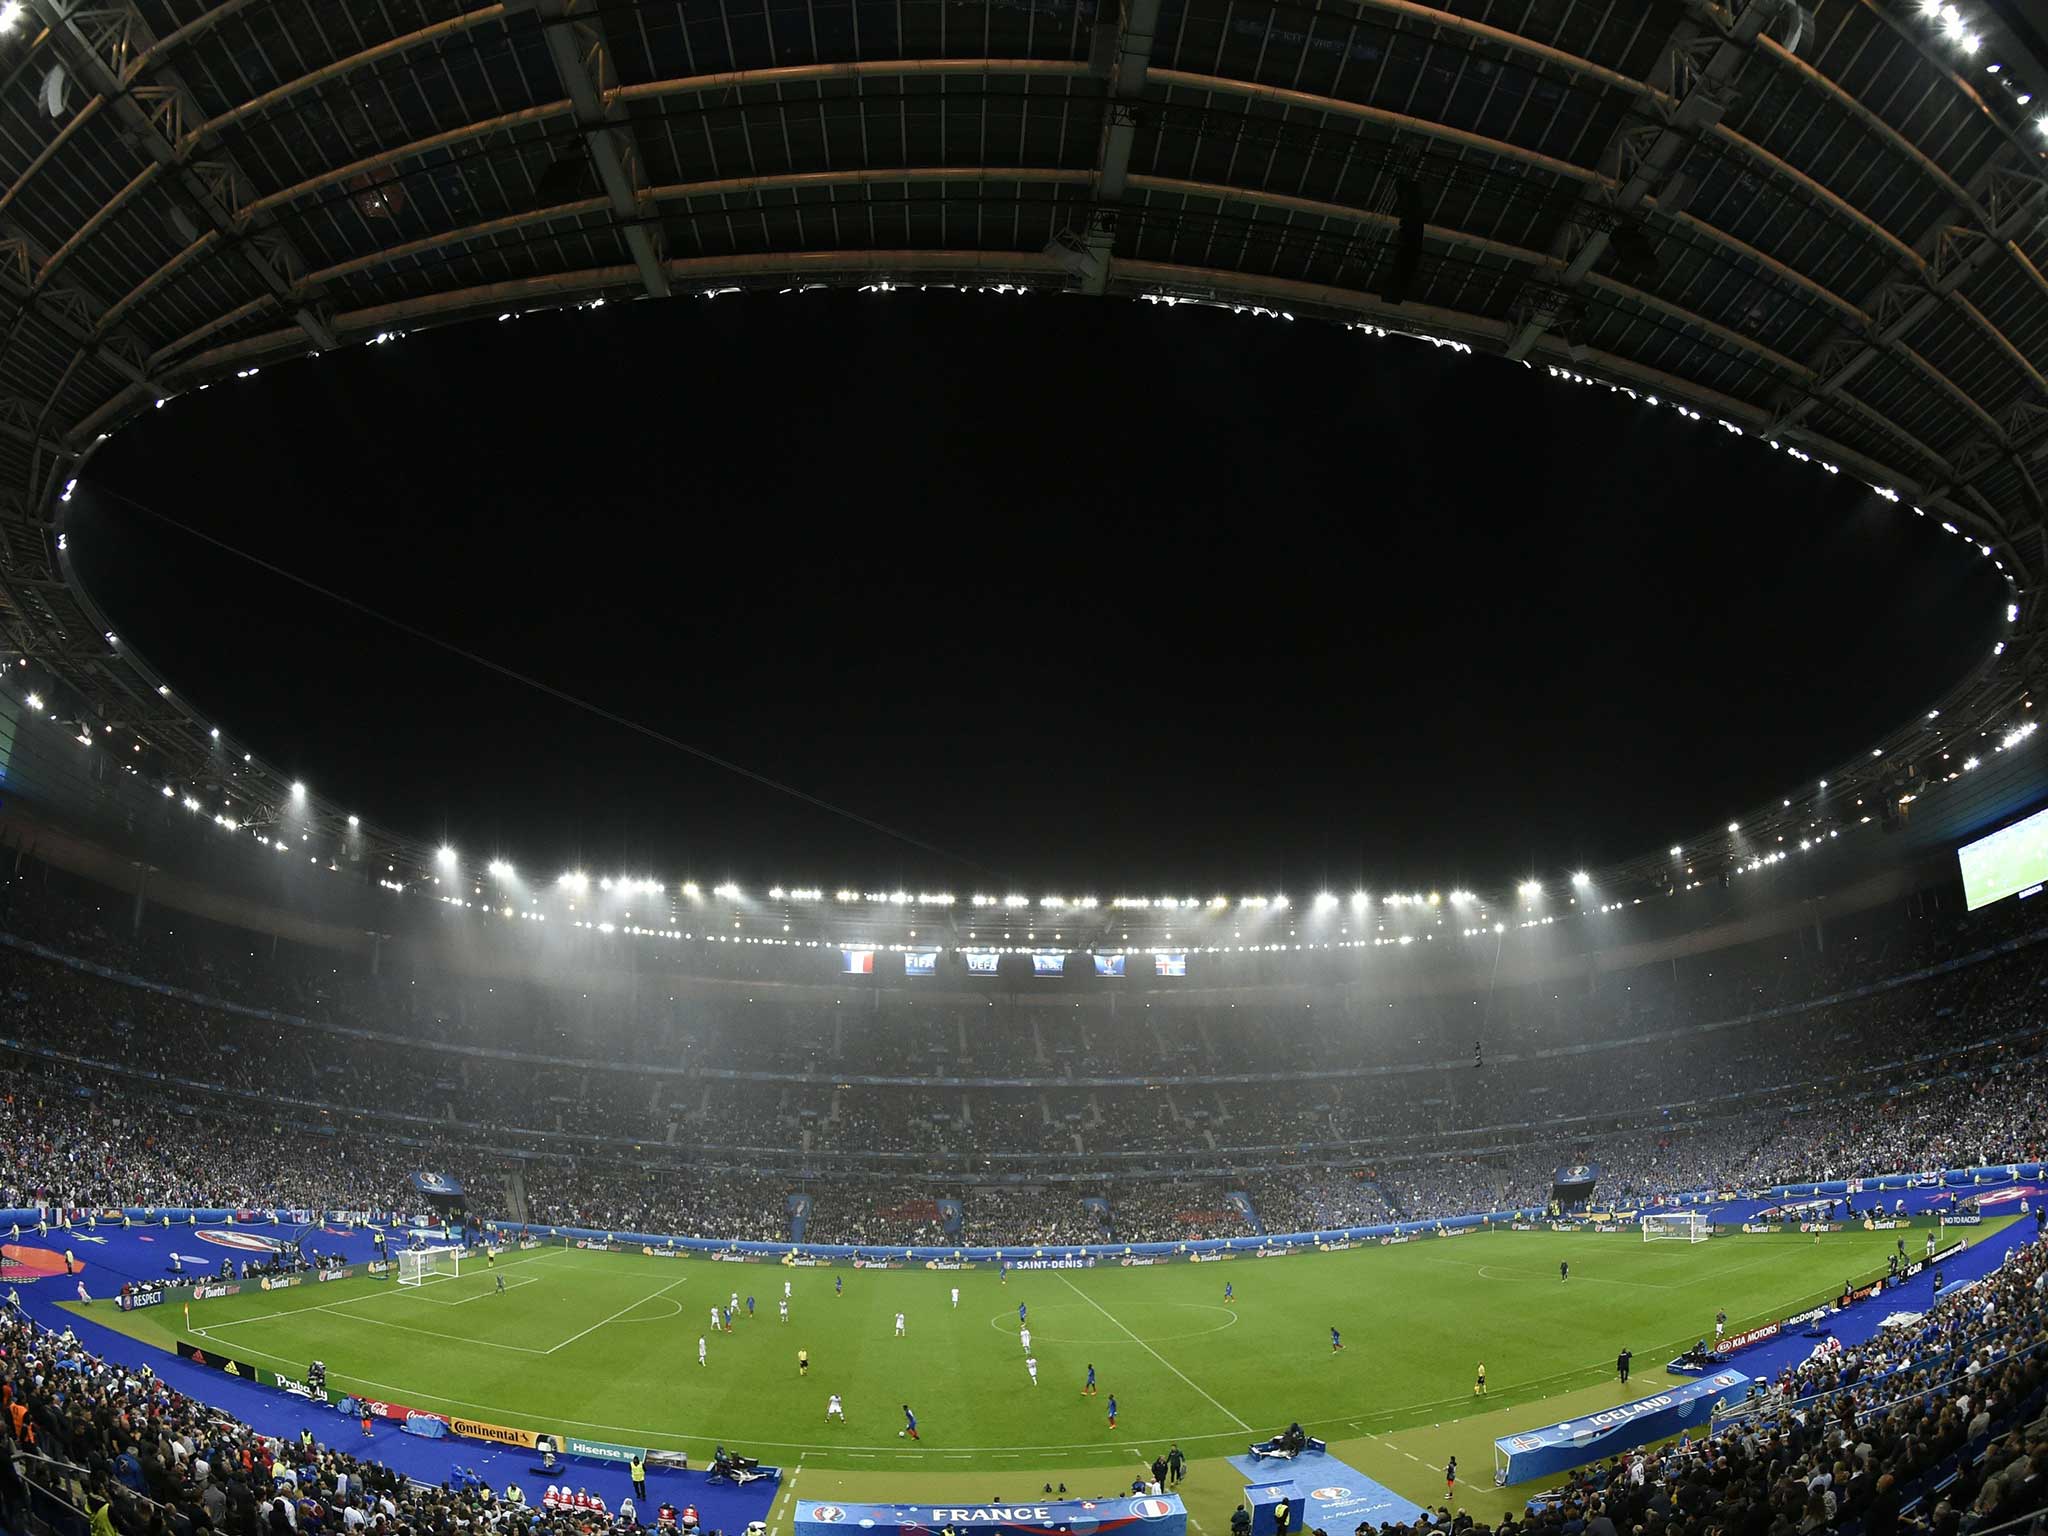 The Stade de France, the venue of the Euro 2016 final